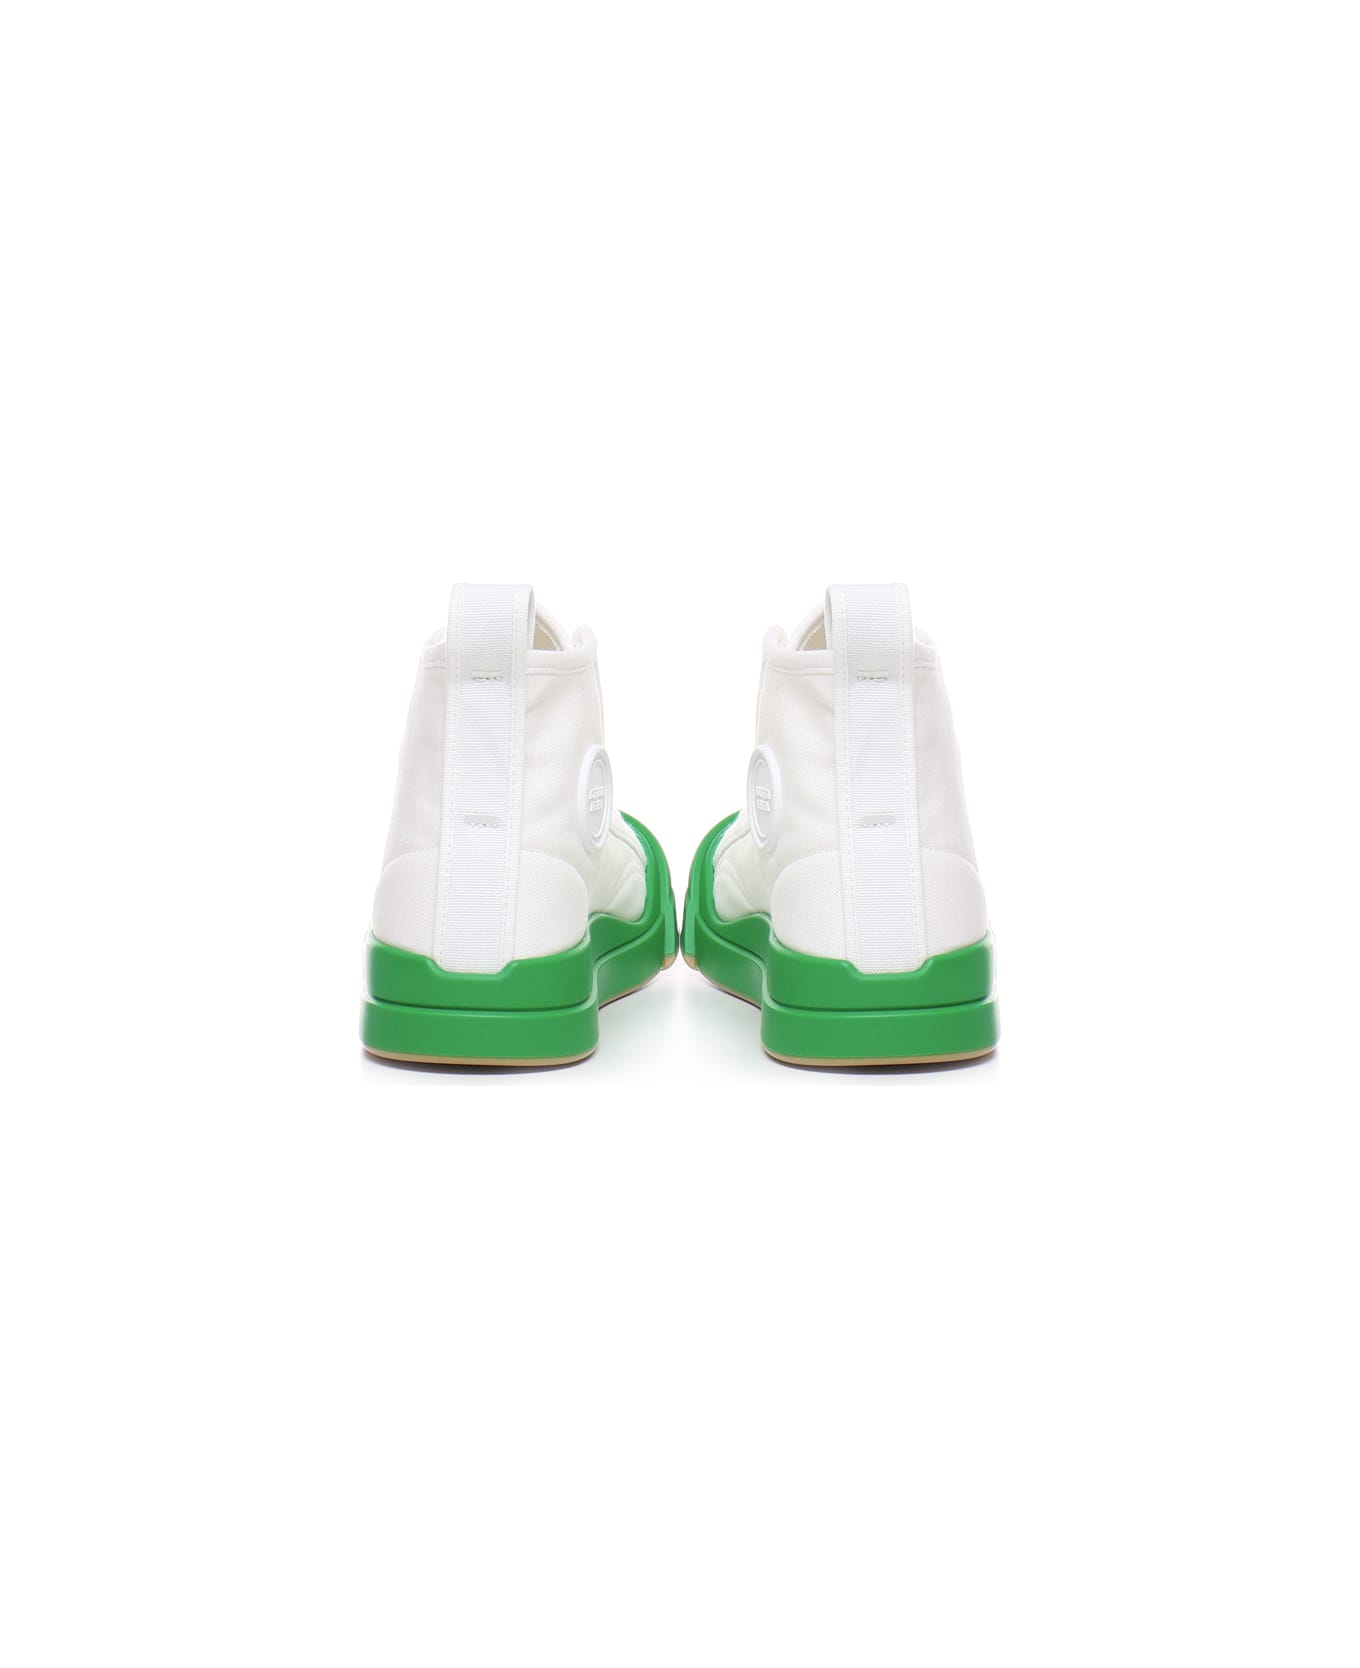 Bottega Veneta Vulcan Sneakers - White, green